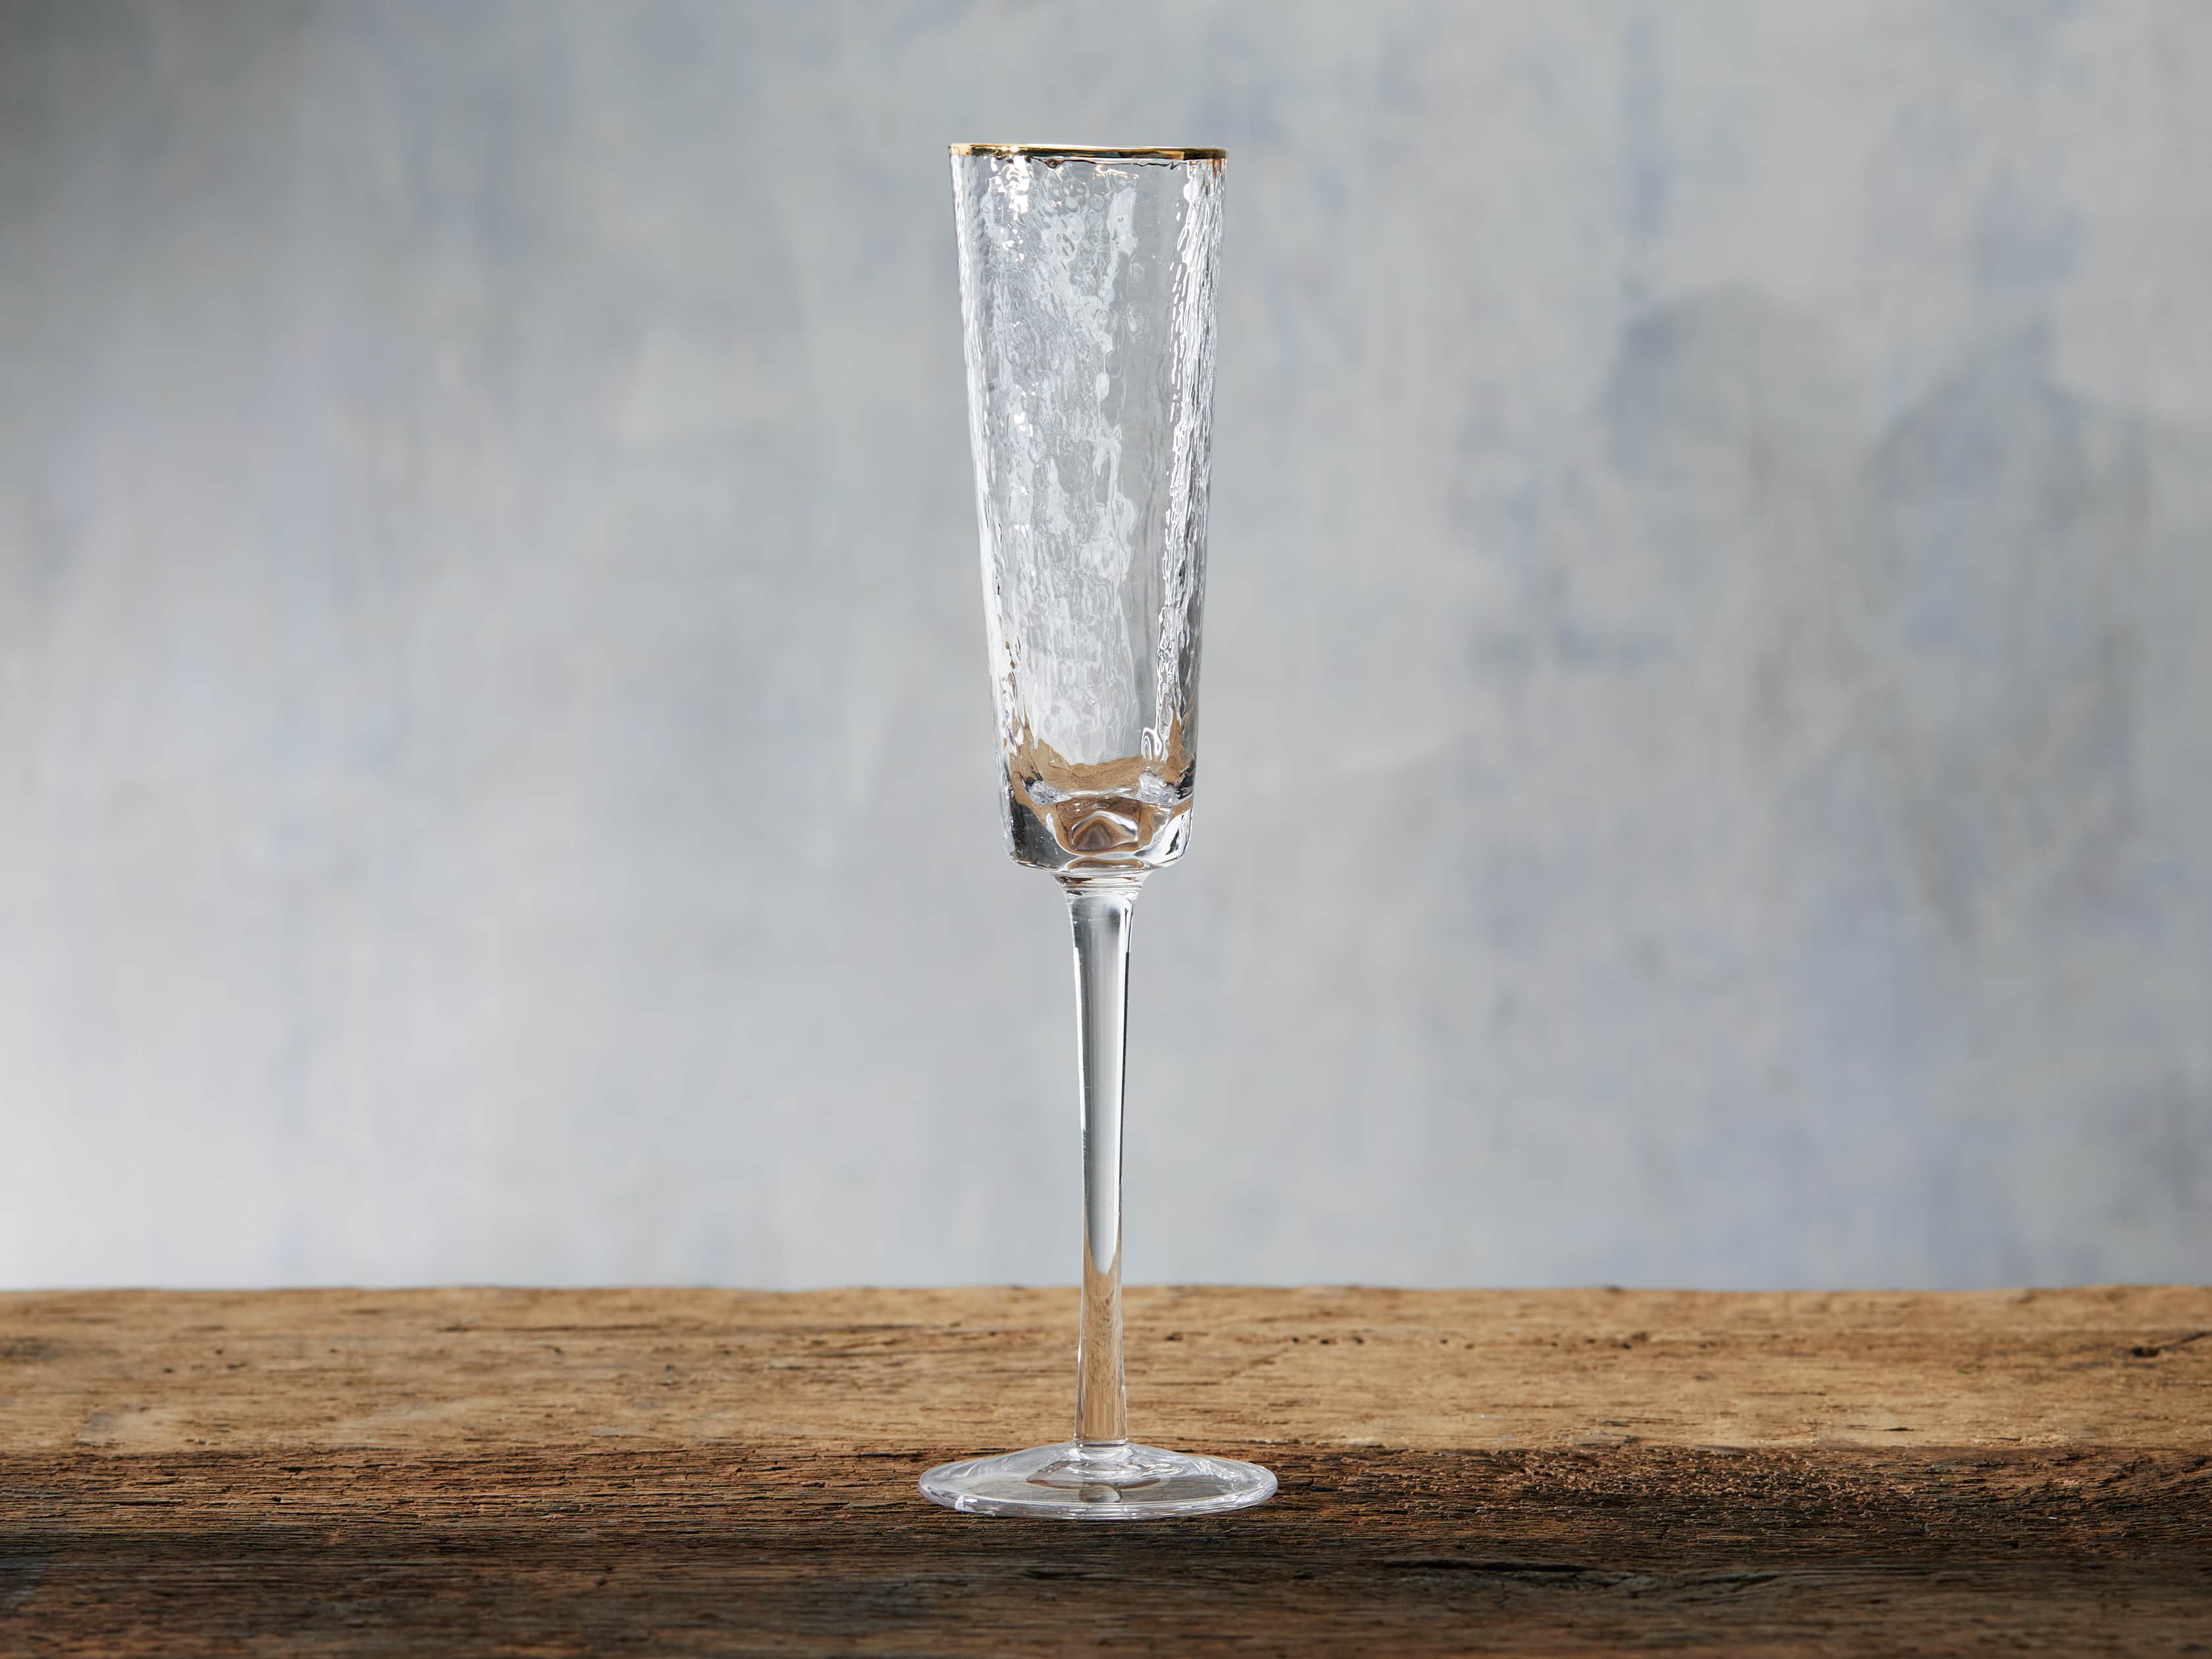 Hammered Glass Champagne Flutes, Set of 4